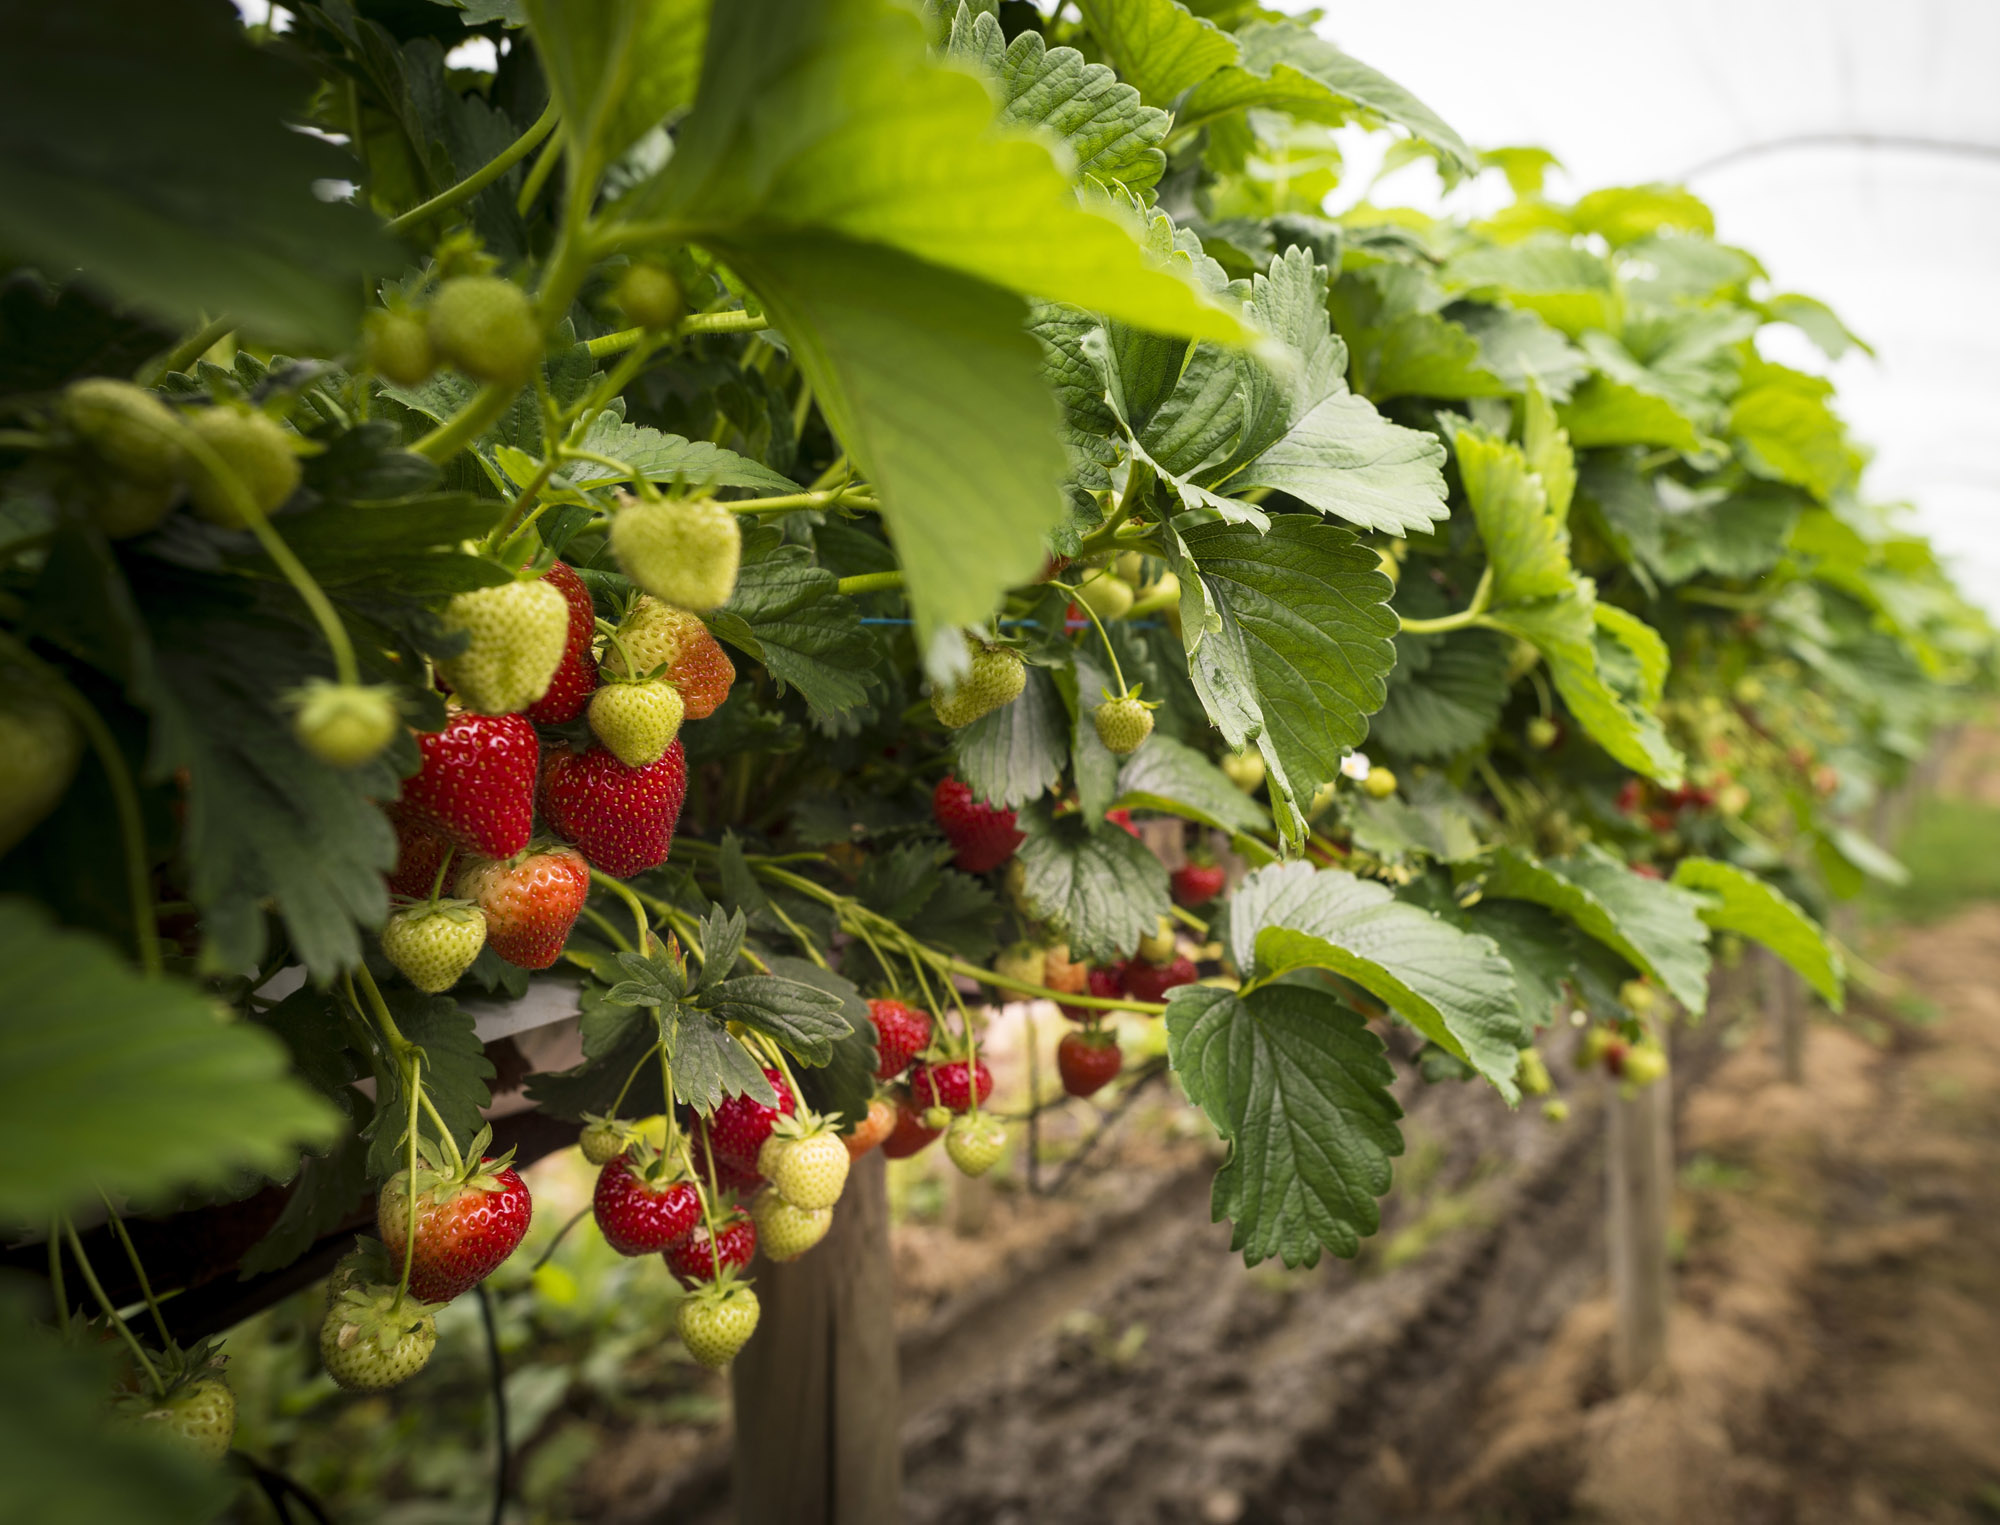 Strawberry Planting has begun at the farm 🍓